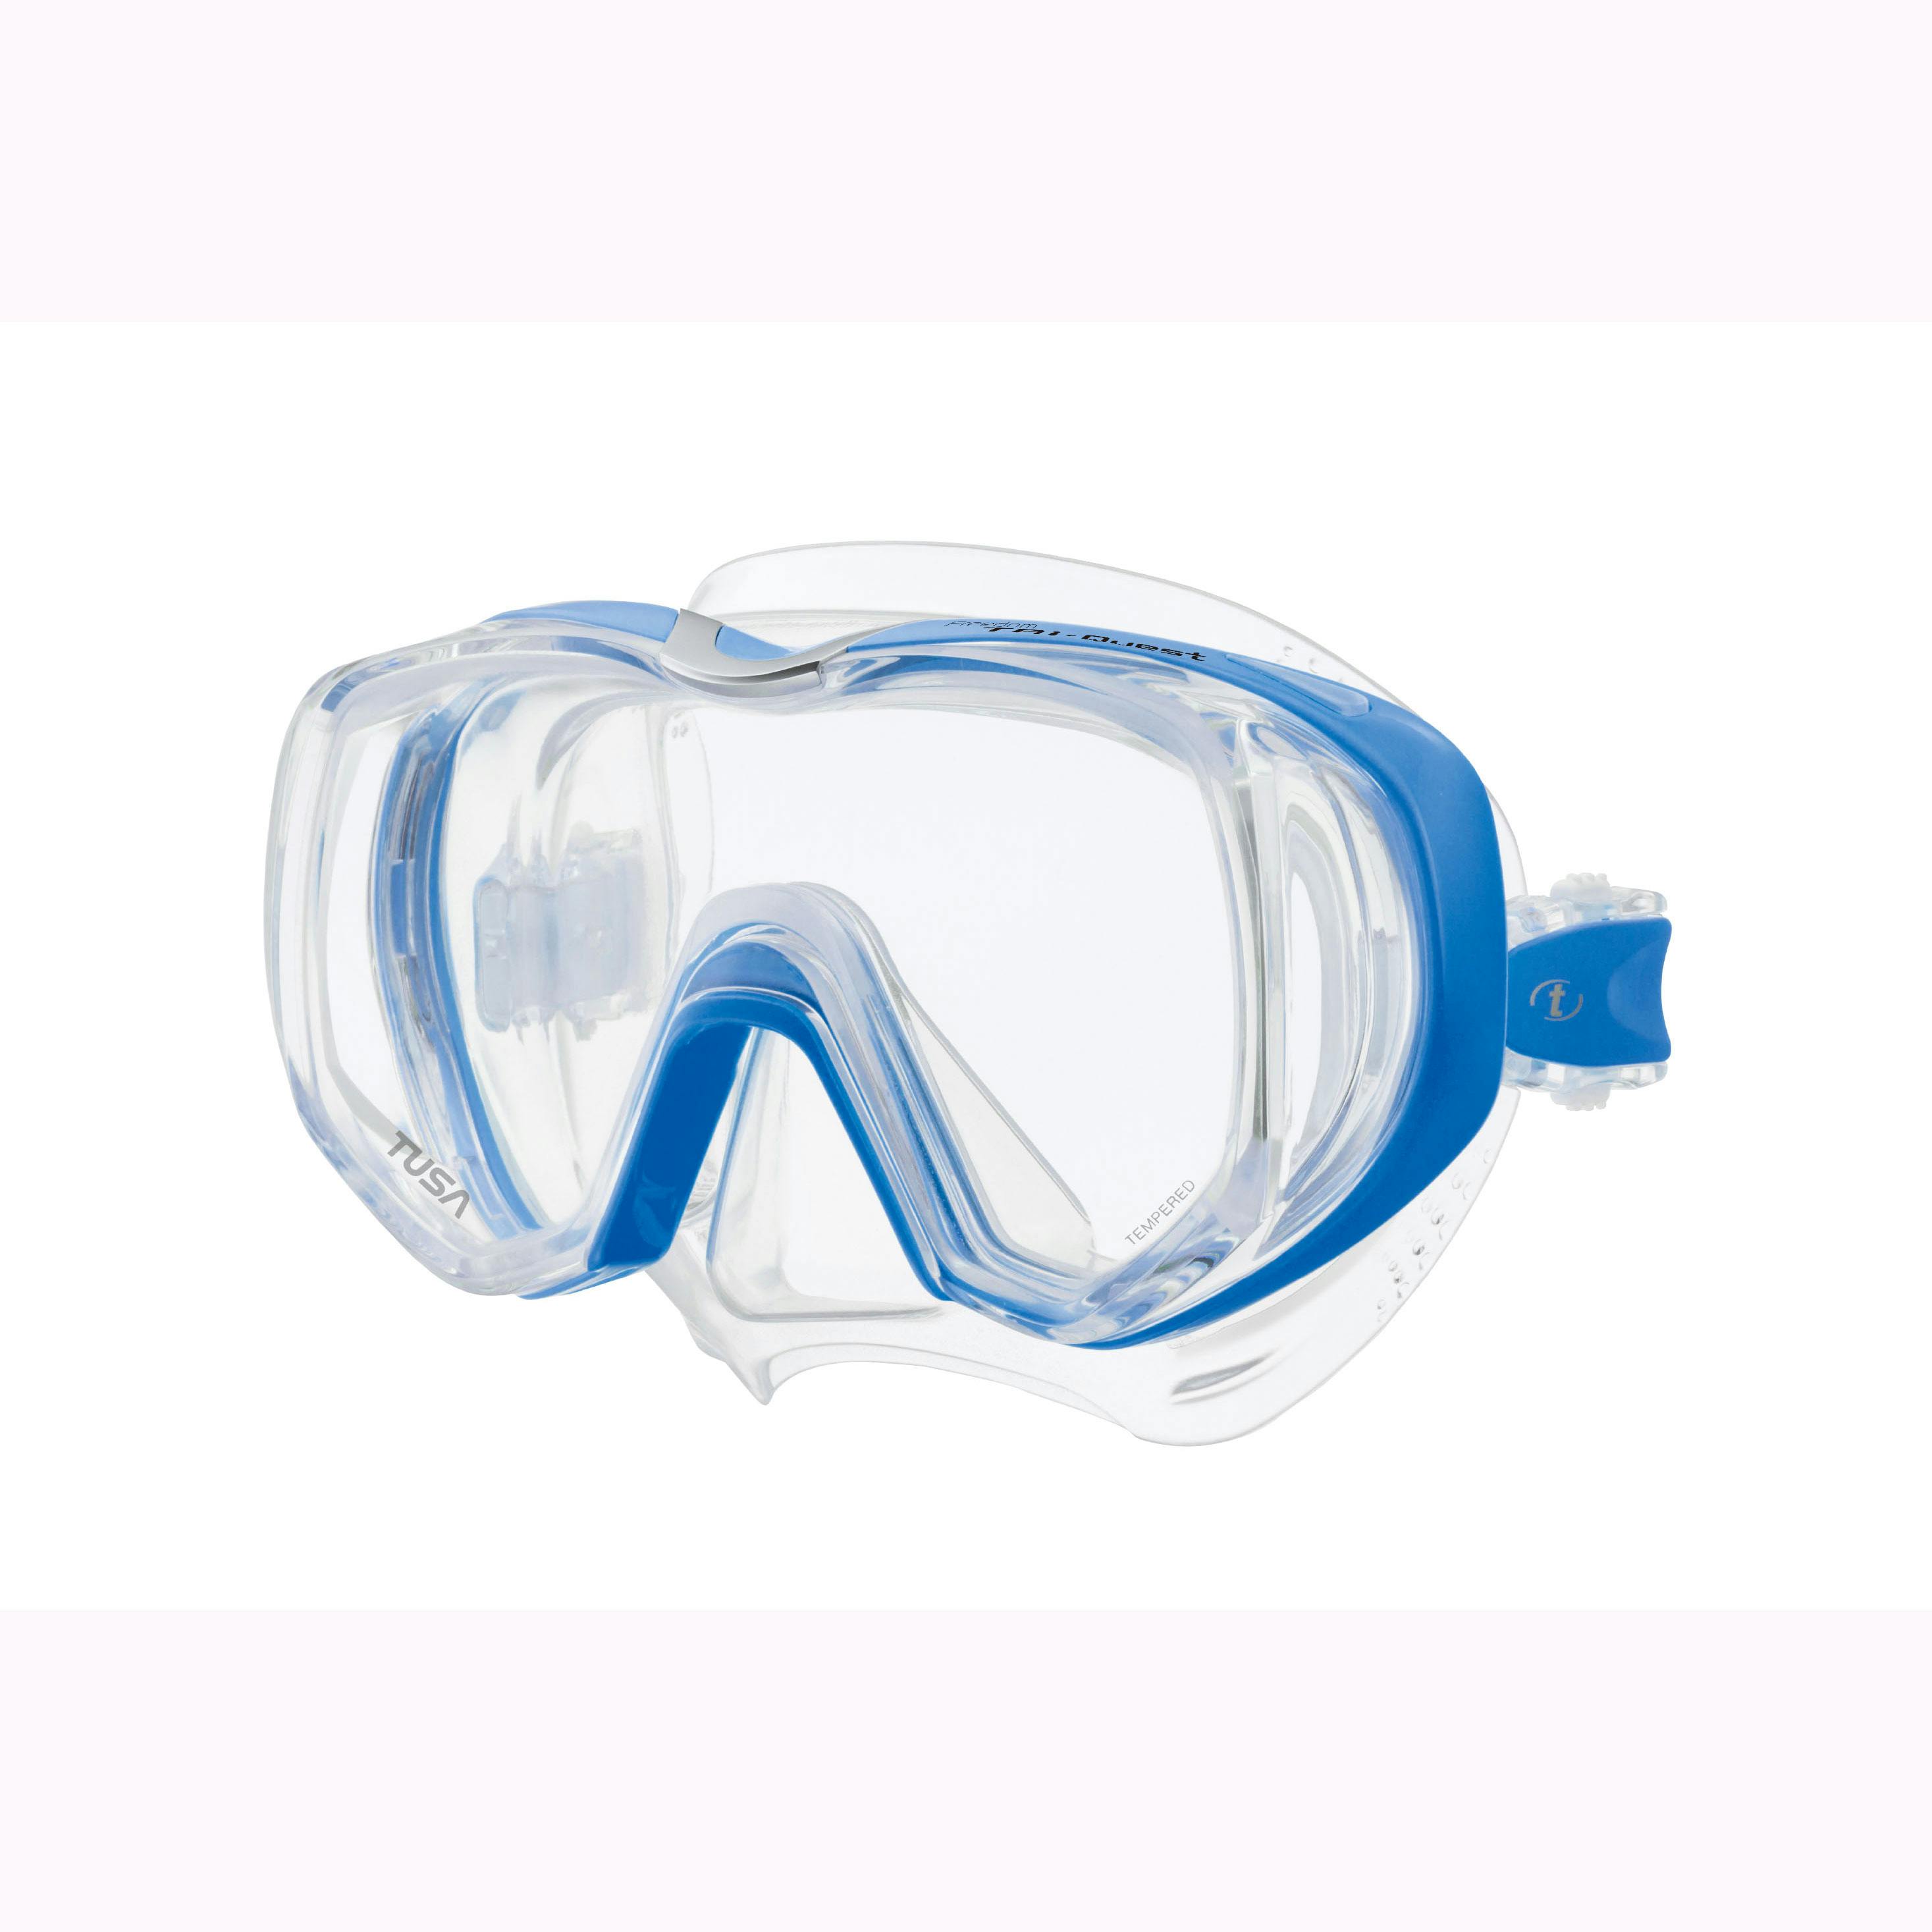 TUSA Tri-Quest Mask, Wraparound Lens - Clear/Fishtail Blue